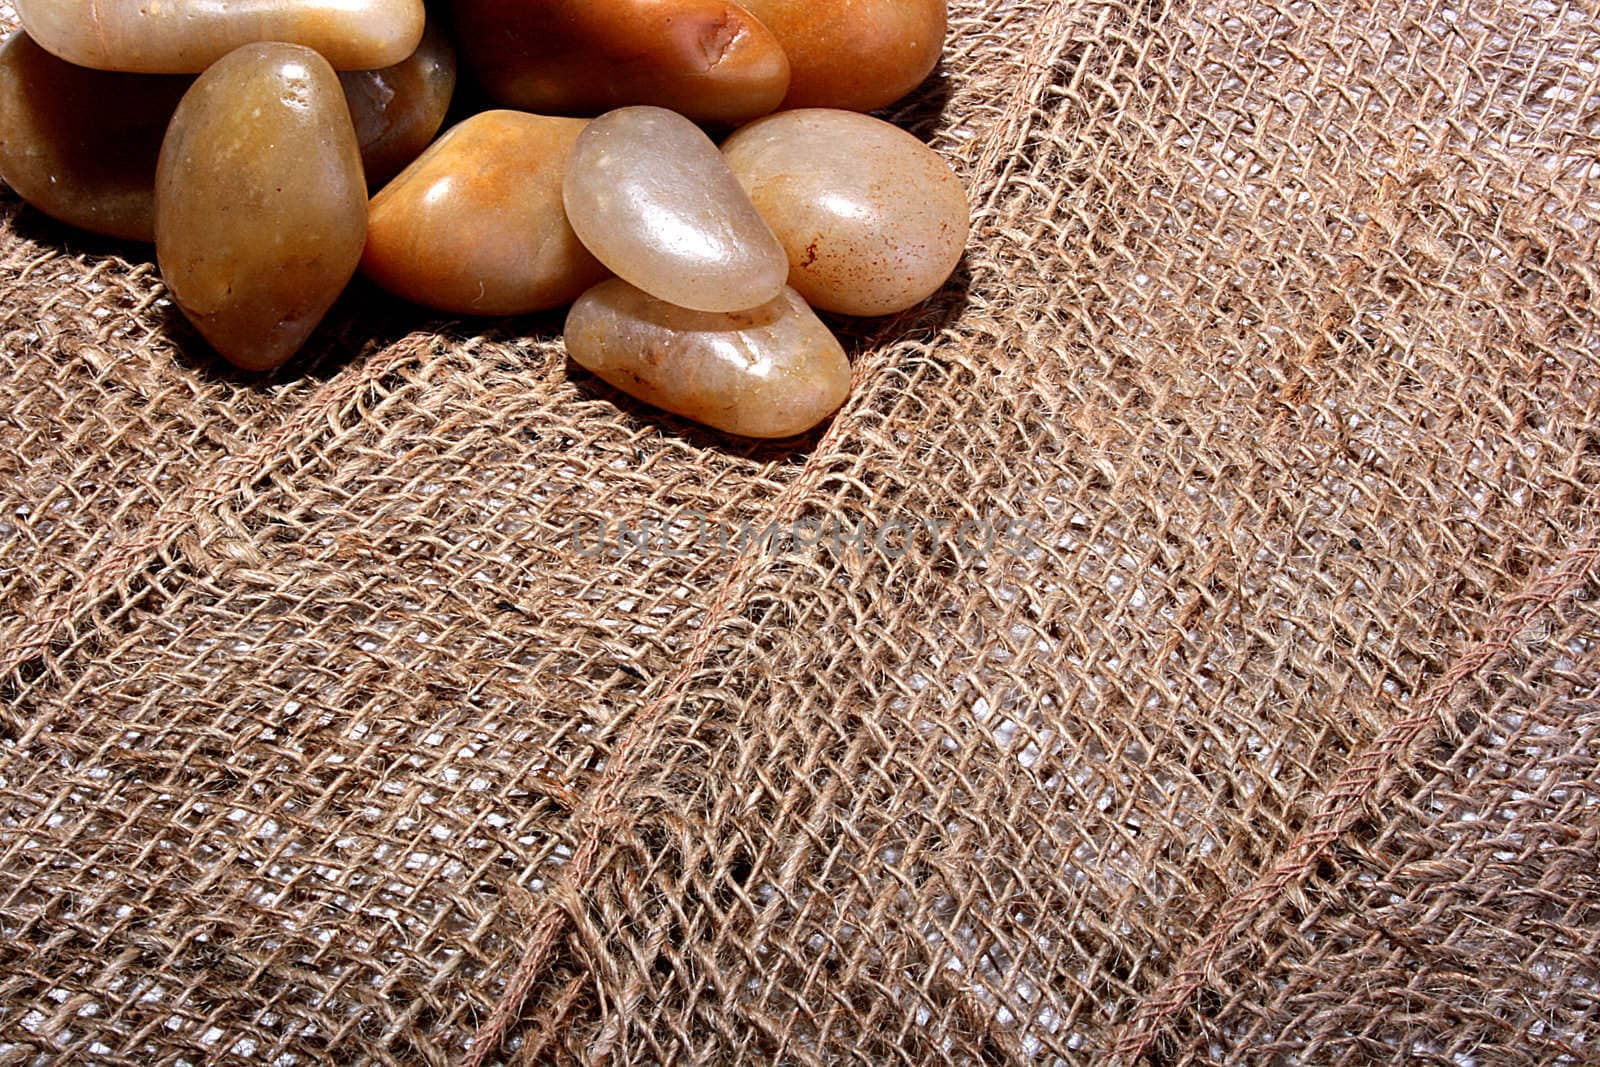 Sea stones lie on a rough sackcloth is light brown colour.